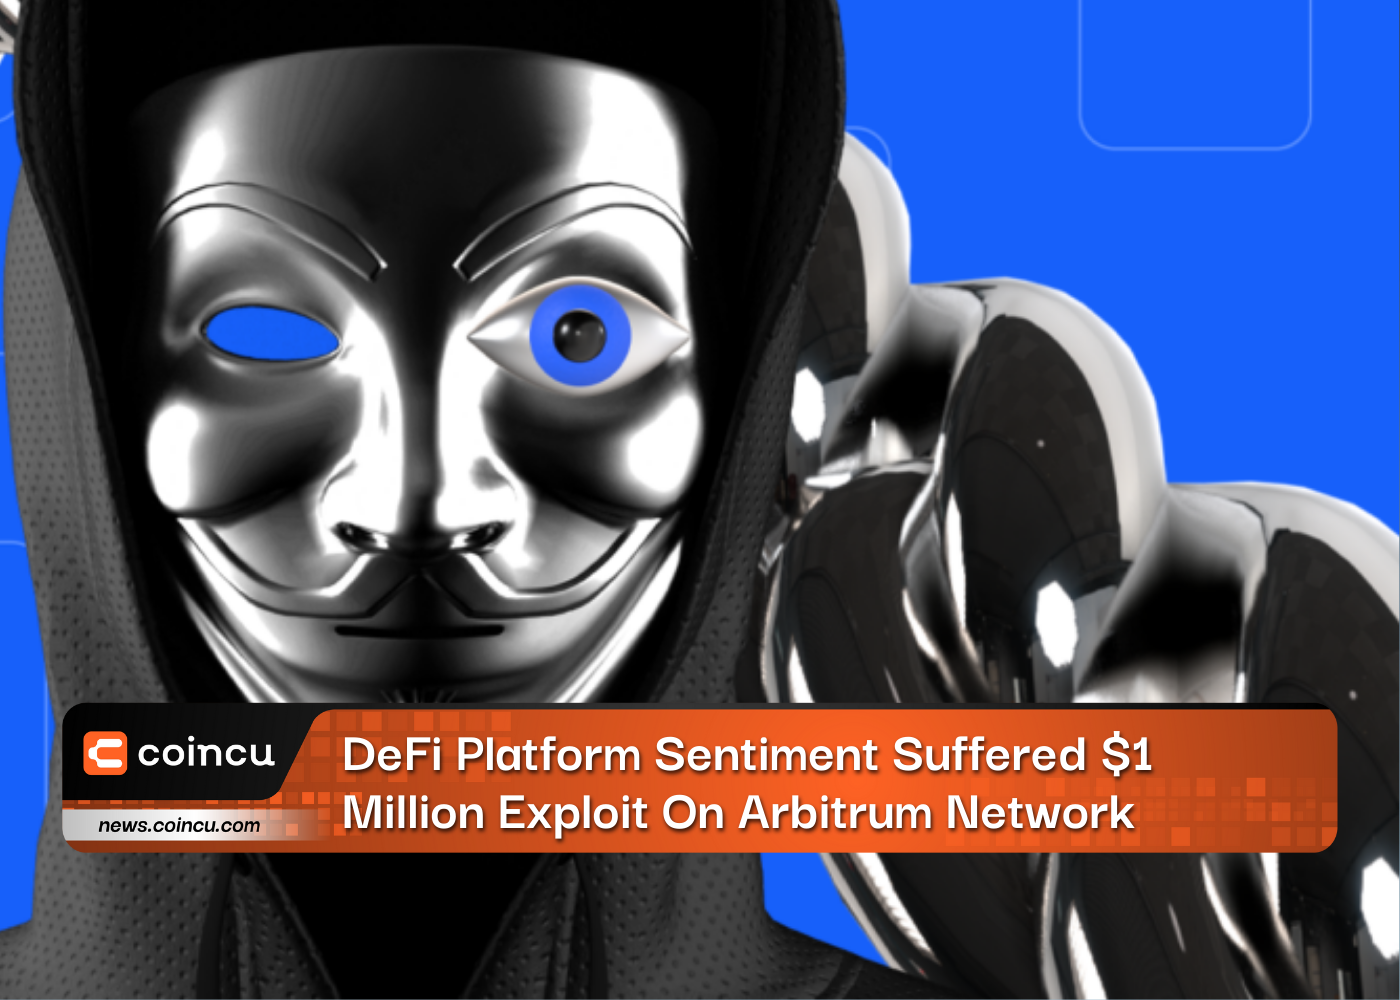 DeFi Platform Sentiment Suffered $1 Million Exploit On Arbitrum Network